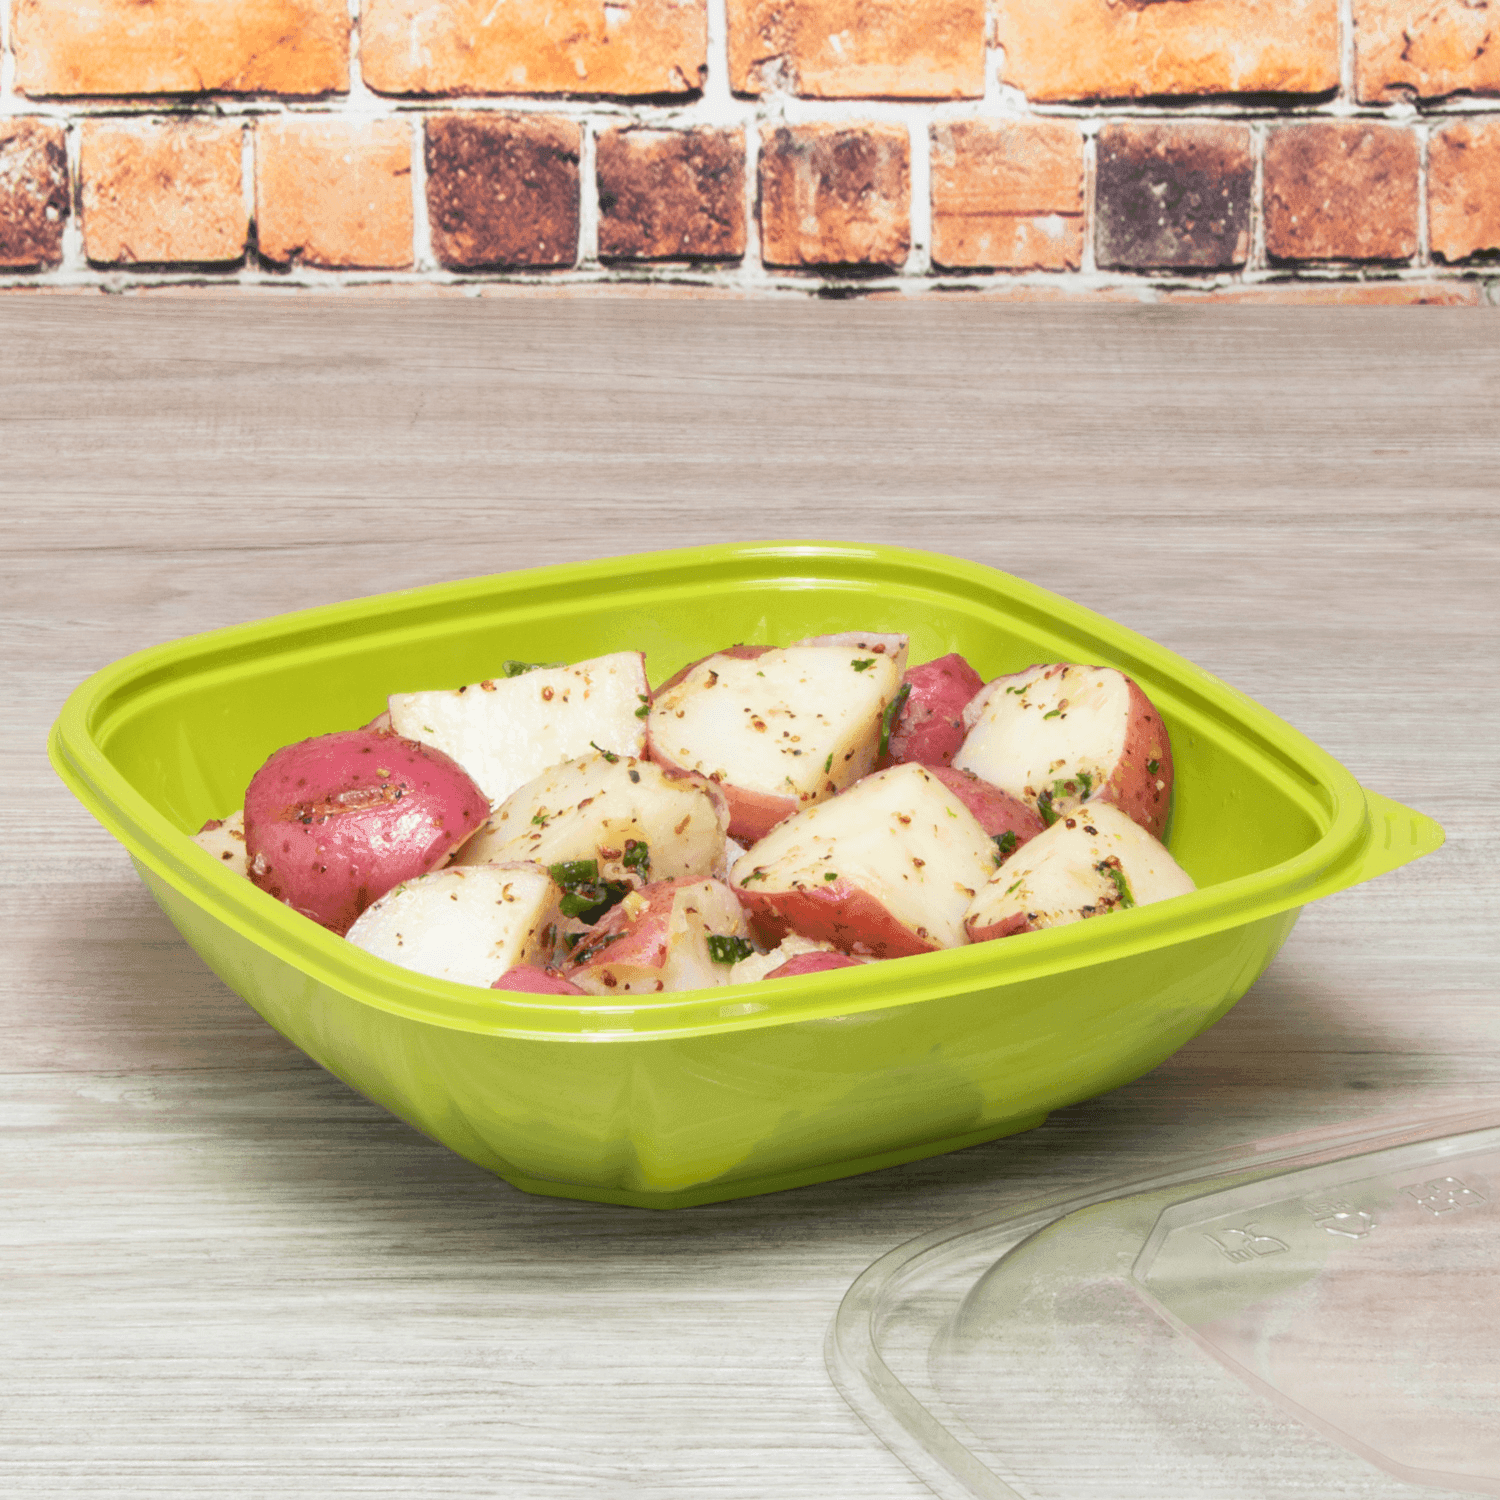 Green Karat 32oz PET Square Bowl with red potatoes